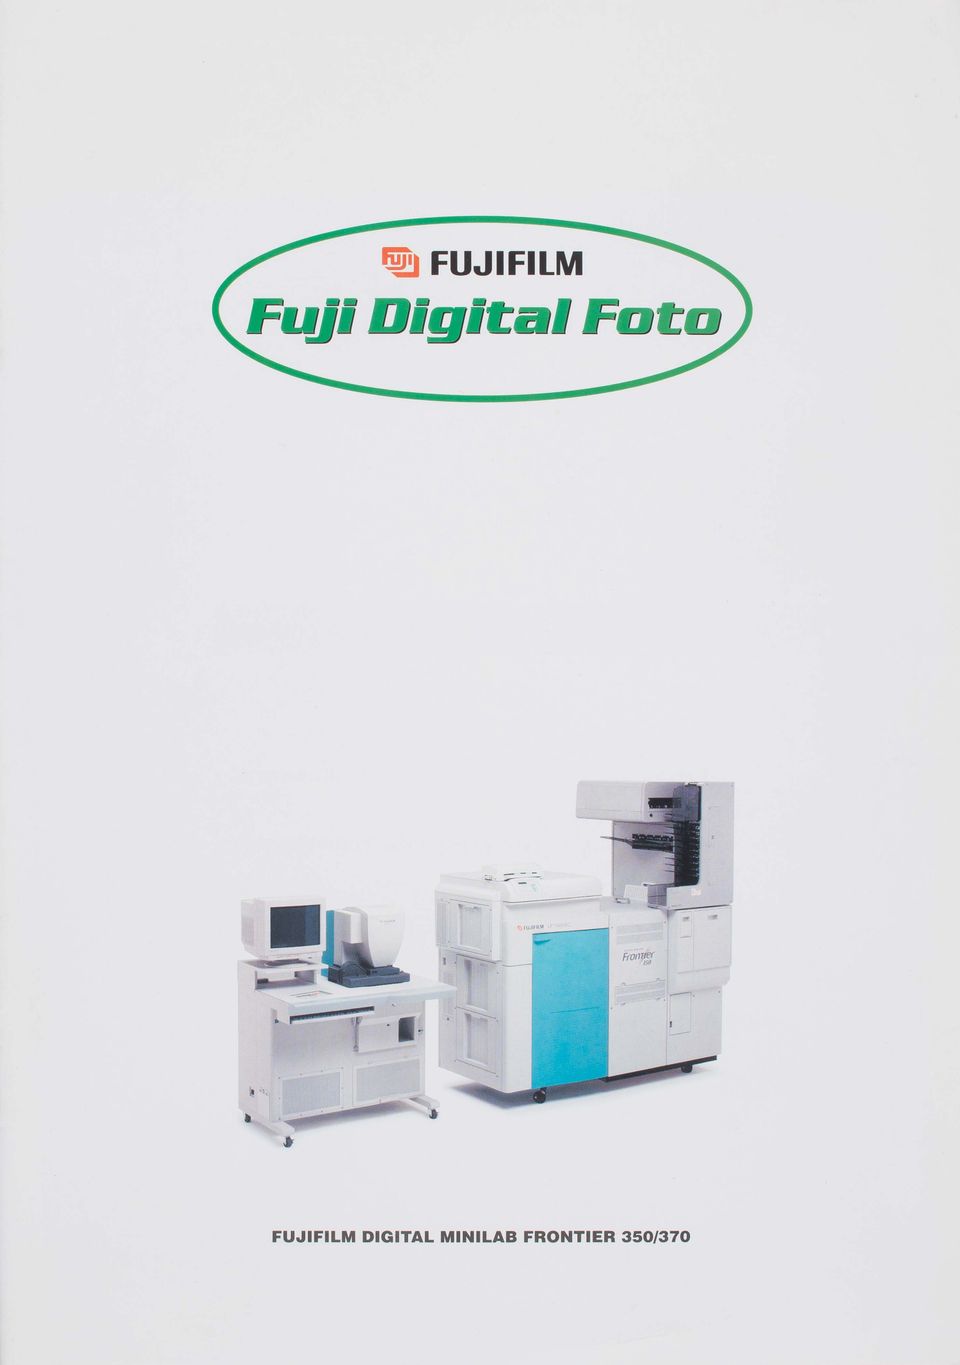 Fujifilm Fuji digital foto